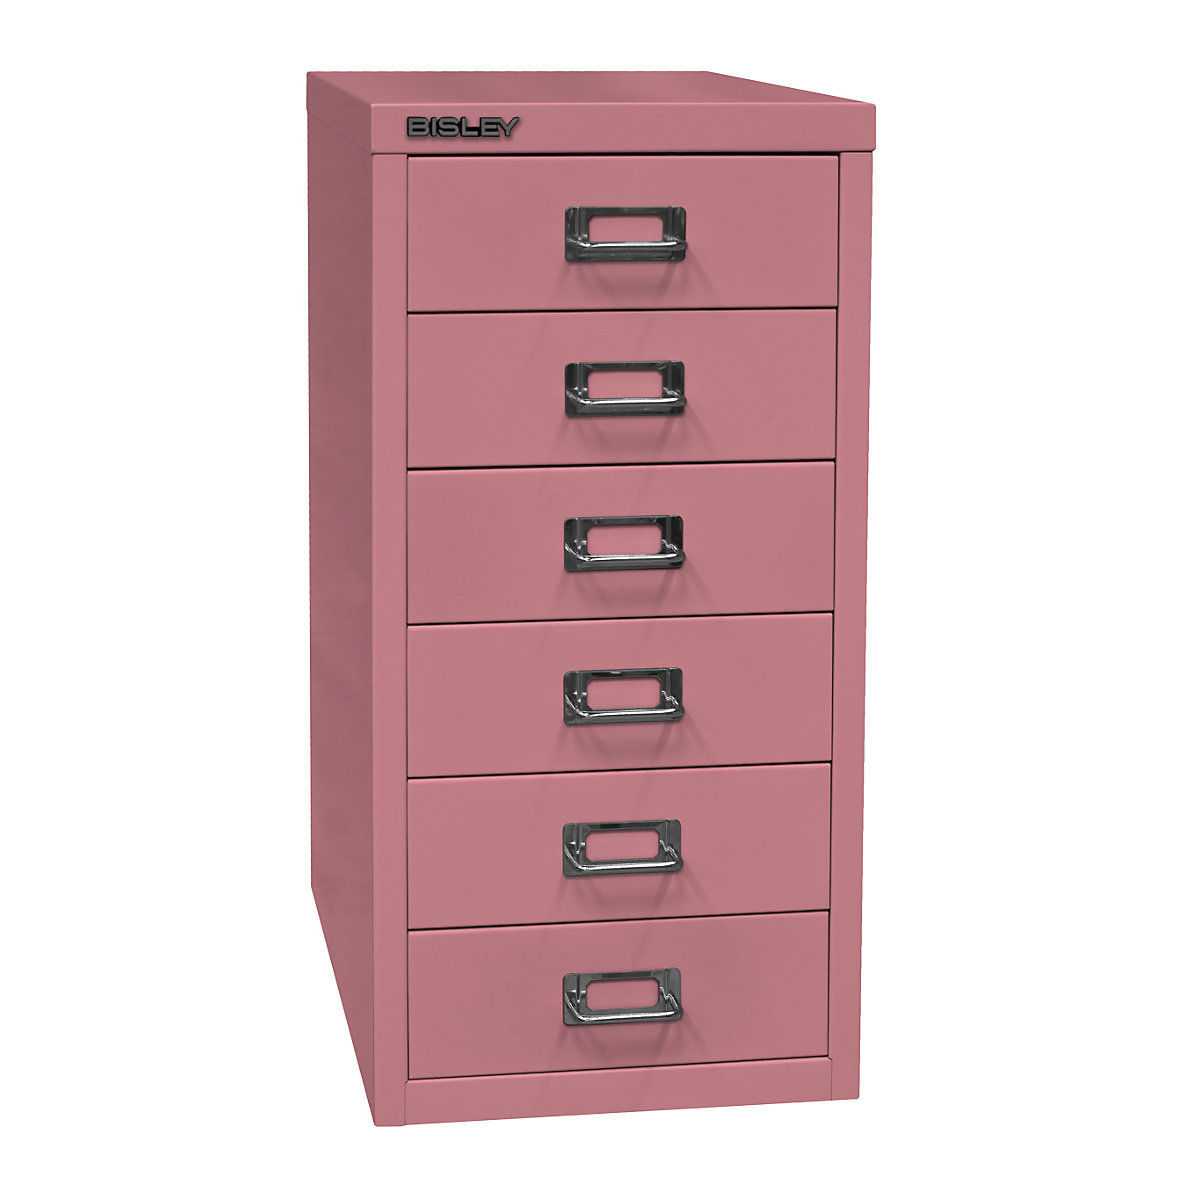 MultiDrawer™ 29 series – BISLEY, A4, 6 drawers, pink-4